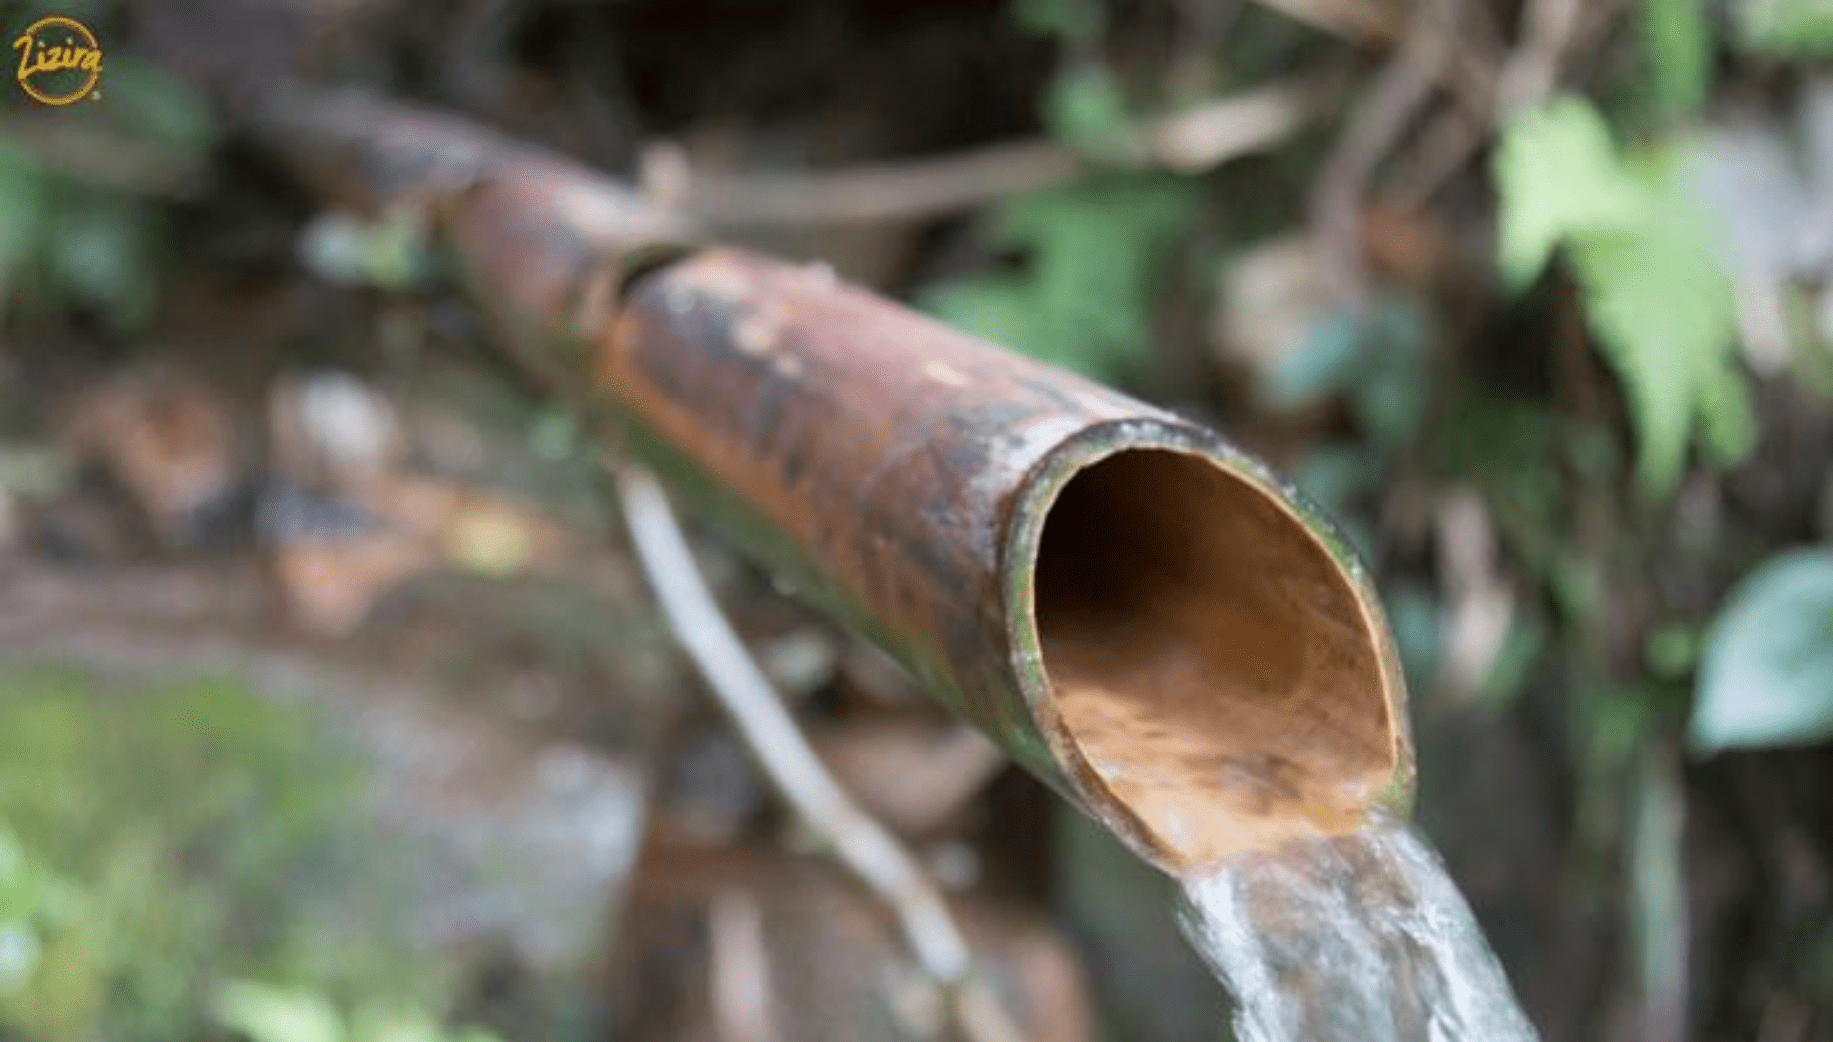 Bamboo drip irrigation practiced in Meghalaya